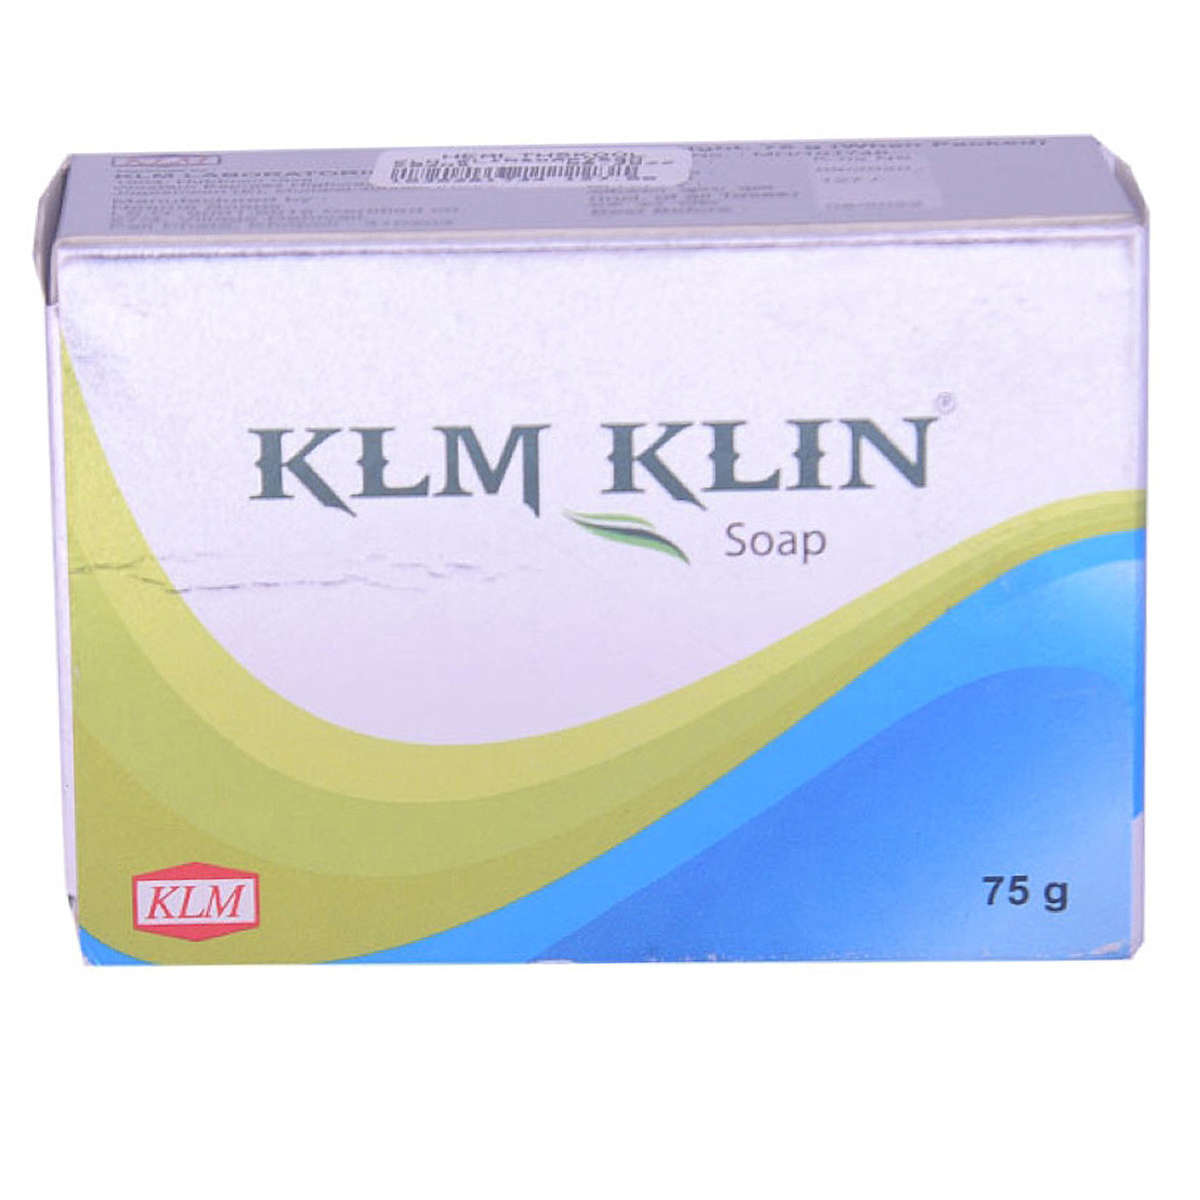 Klm Klin Soap, 75gm